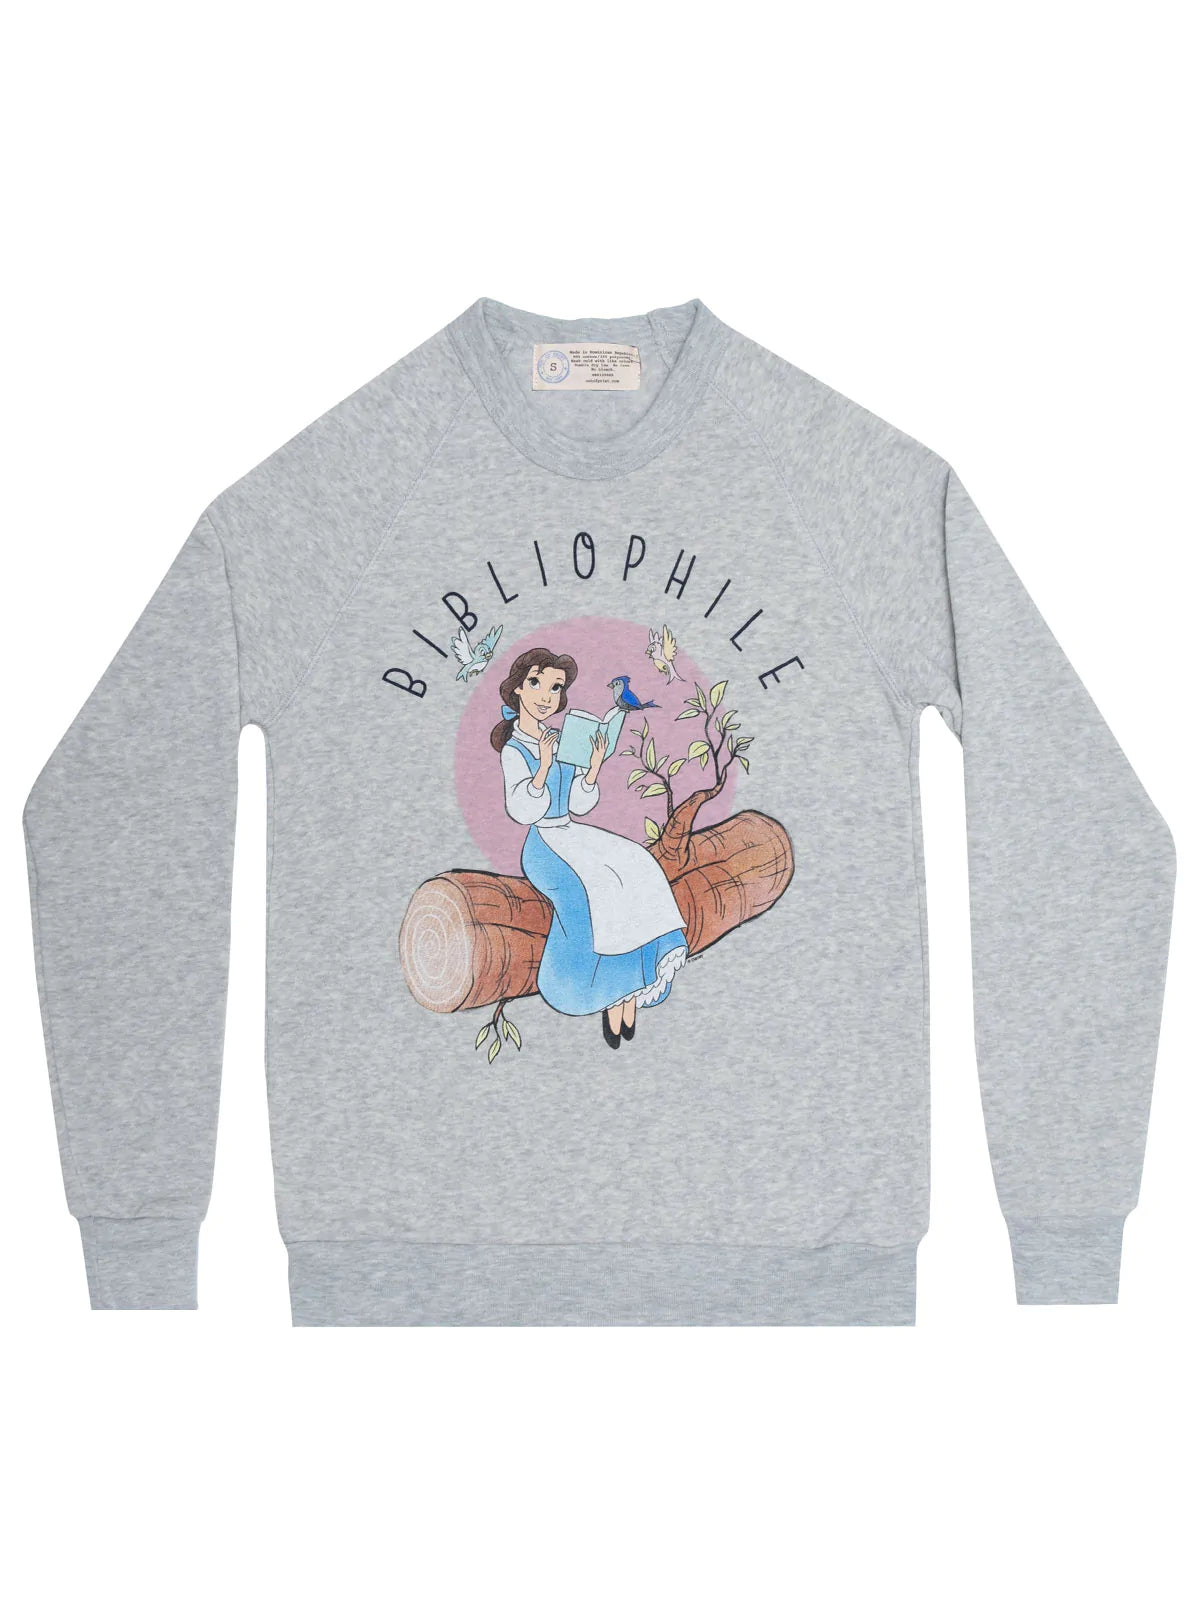 Disney Princess Belle: Bibliophile Unisex Sweatshirt